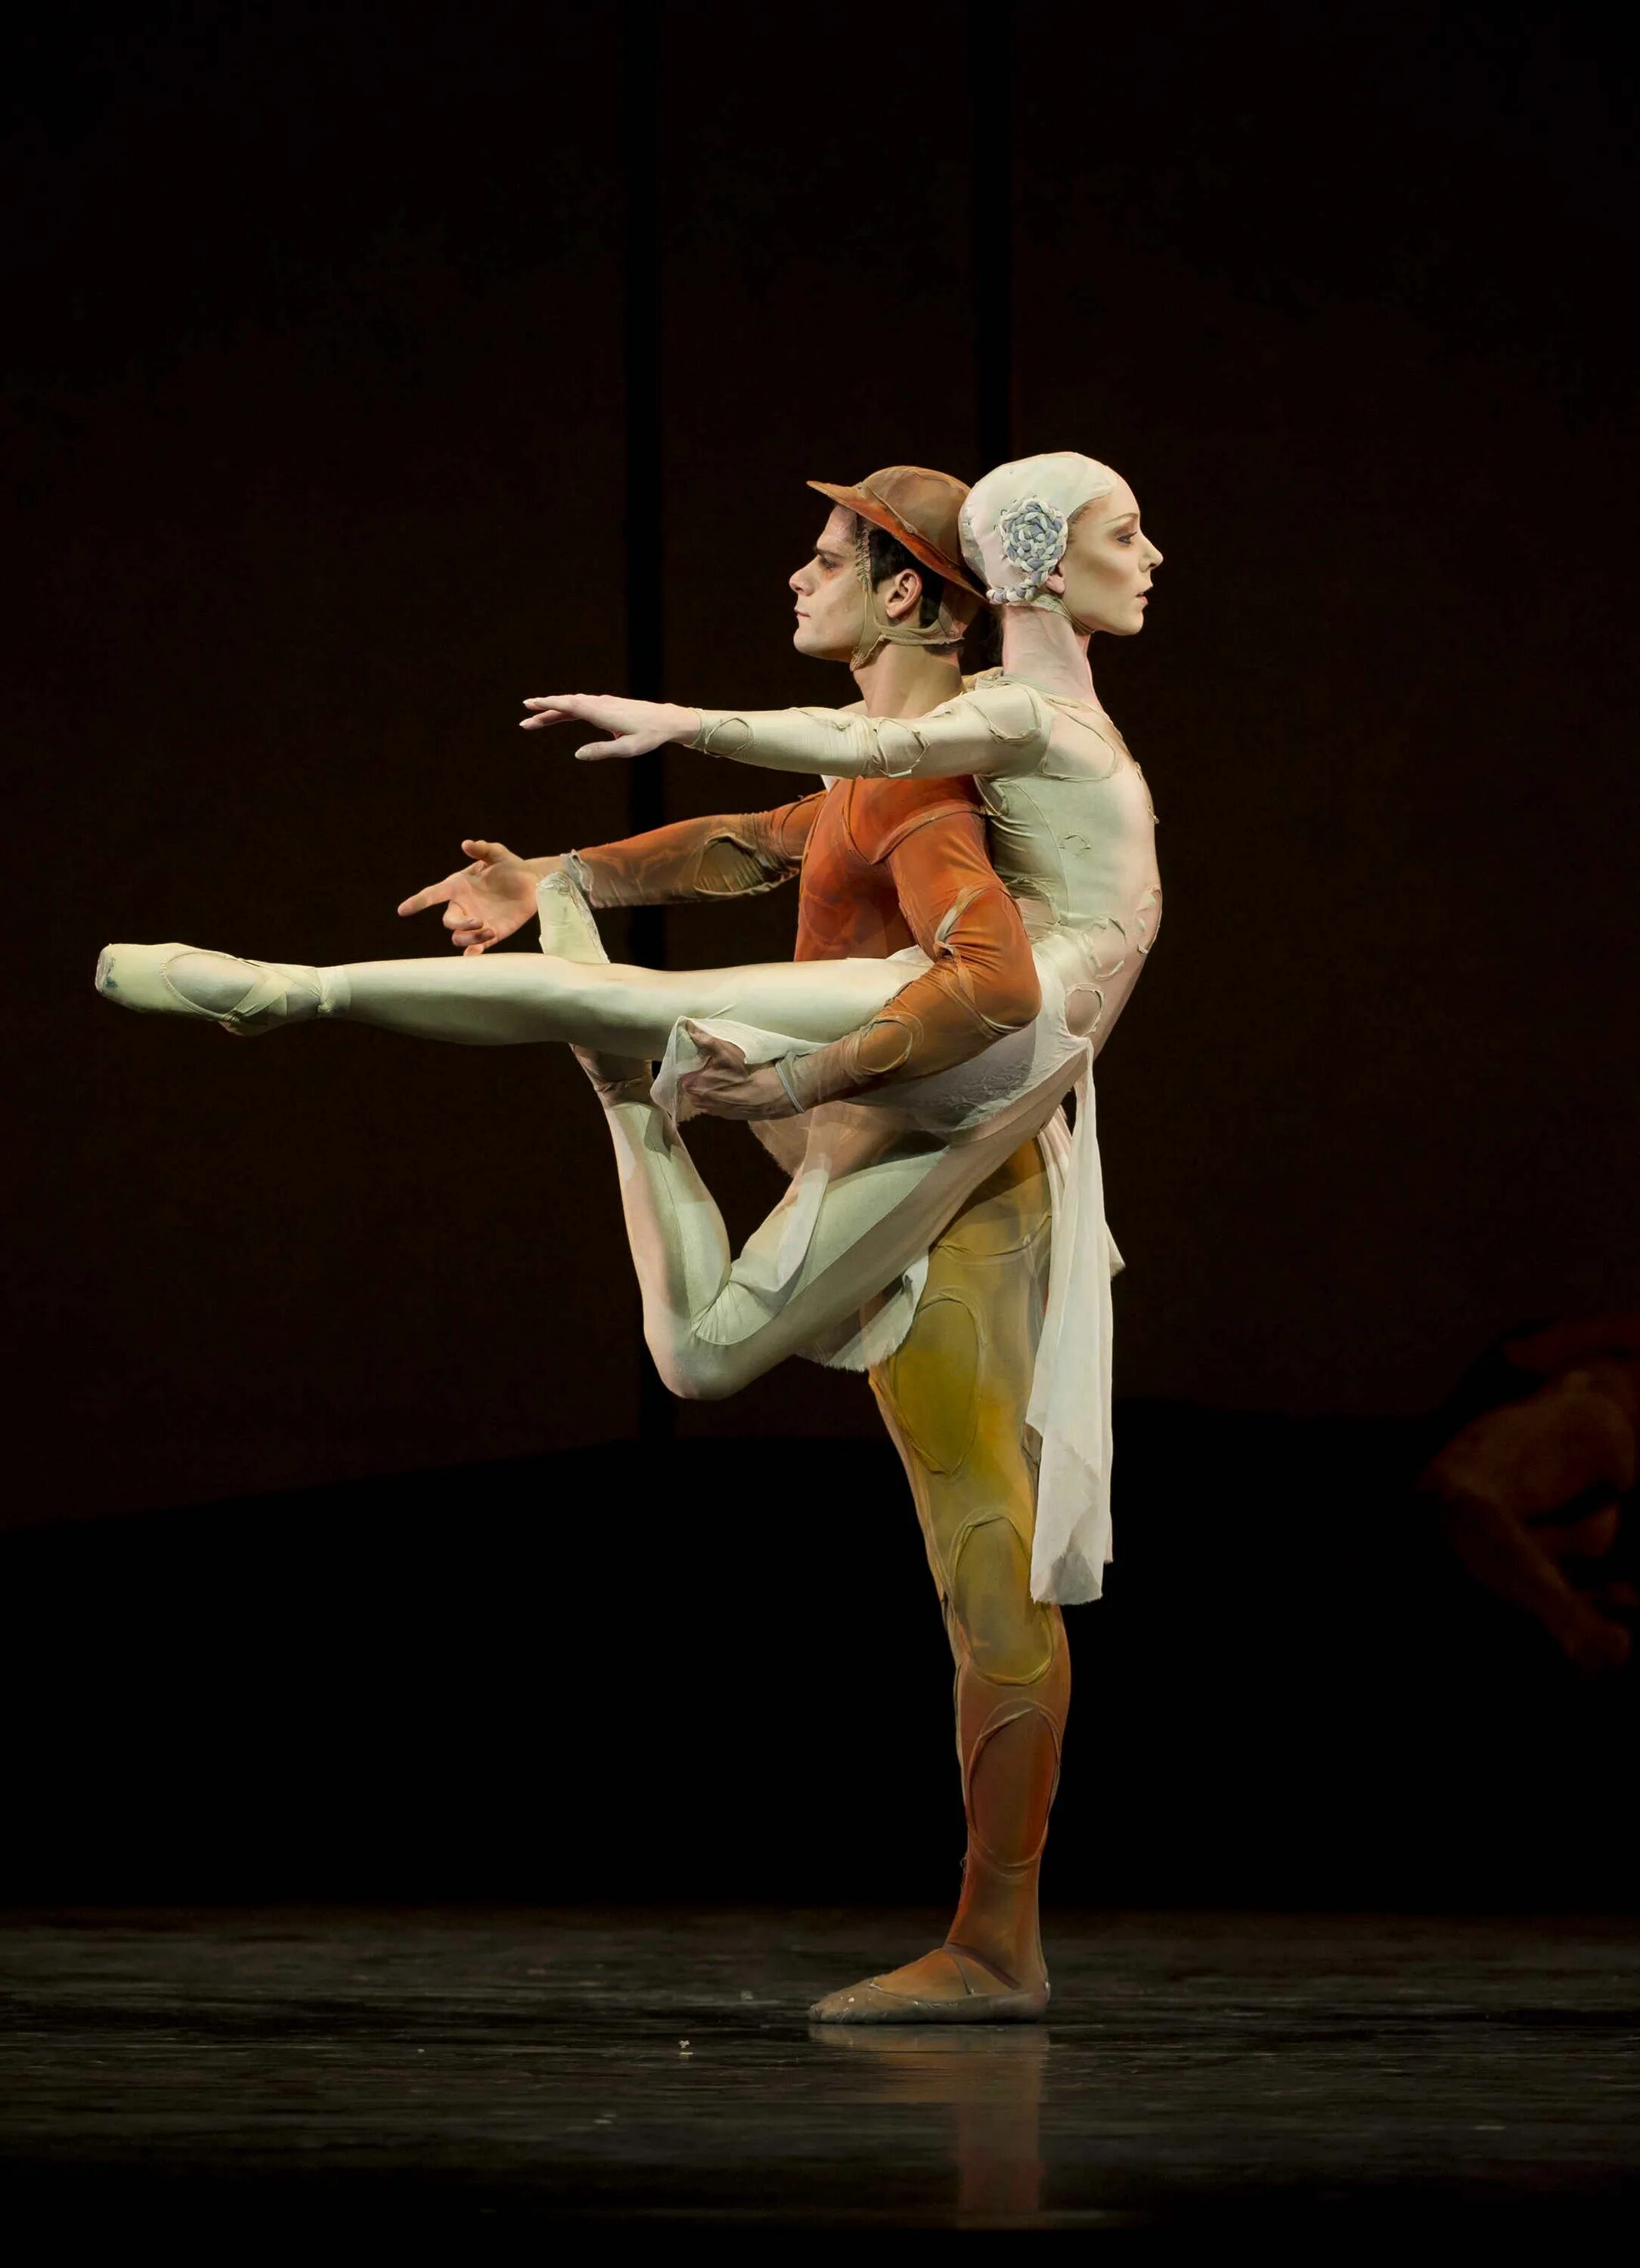 Балет дуэт. Sarah Lamb Ballet. Тьяго Соарес балет. Суареш Пинто Тьяго балет. Королевский балет.